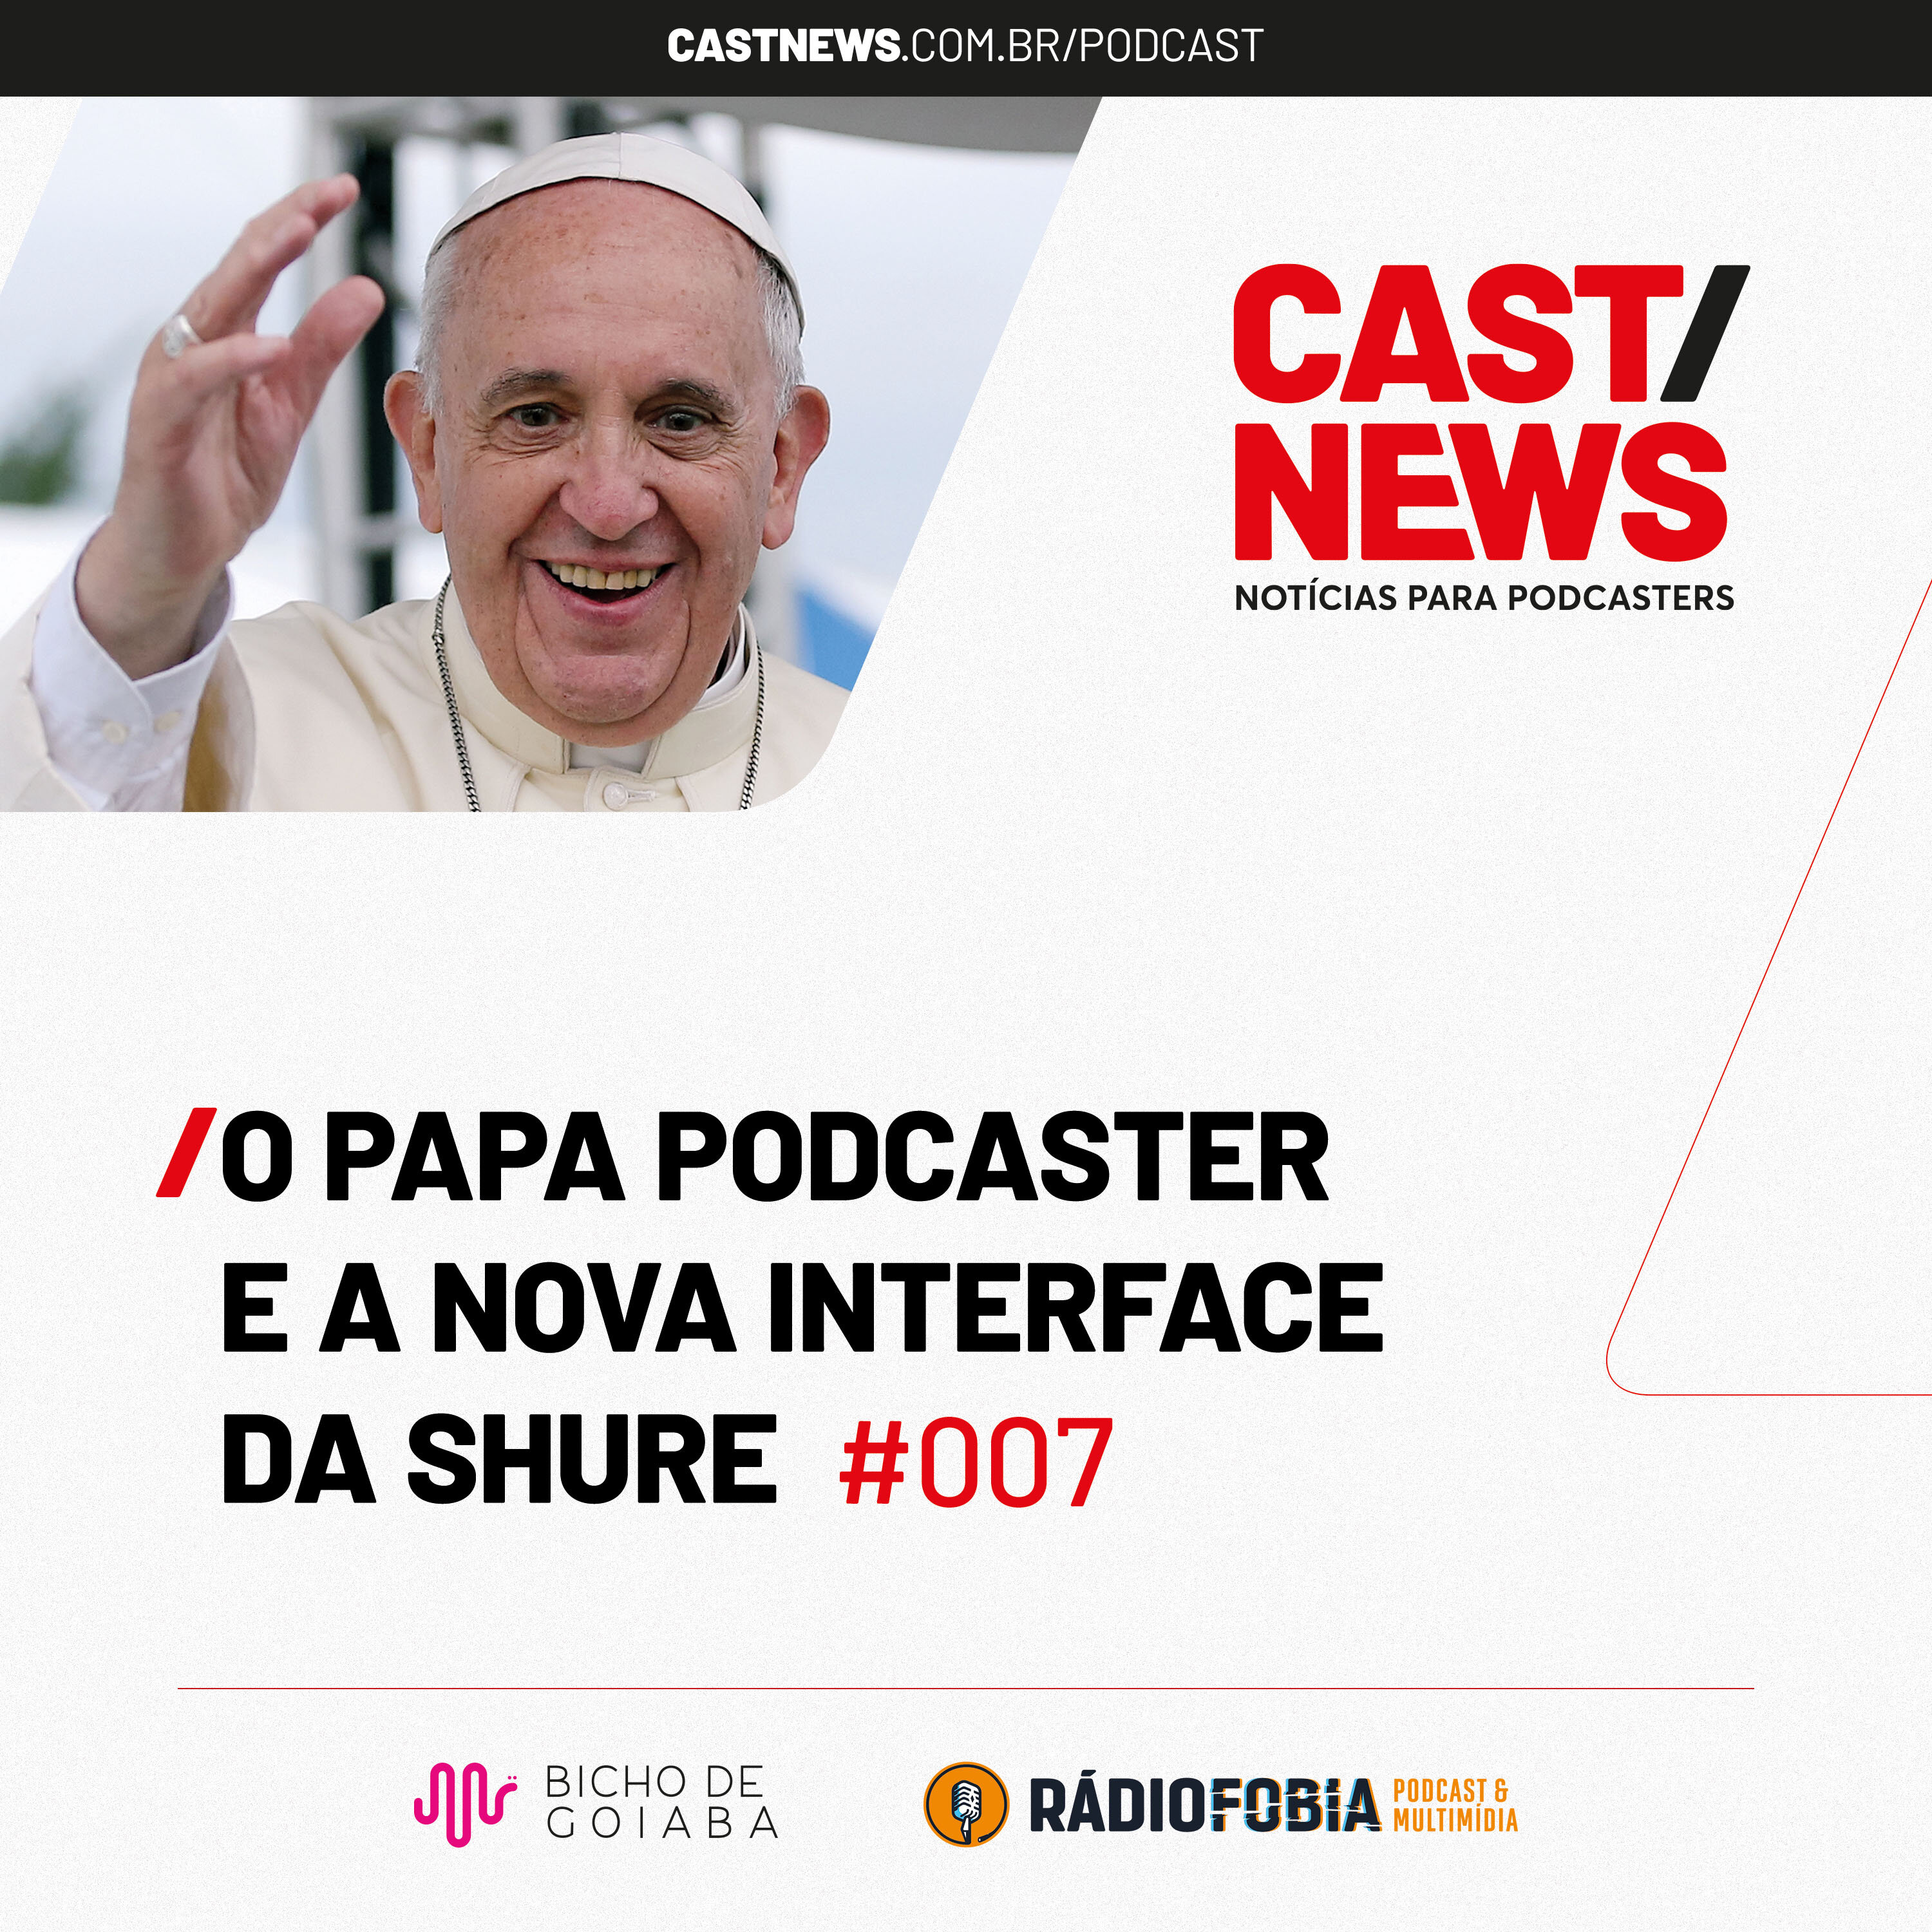 CASTNEWS #007 - O papa podcaster e a nova interface da Shure